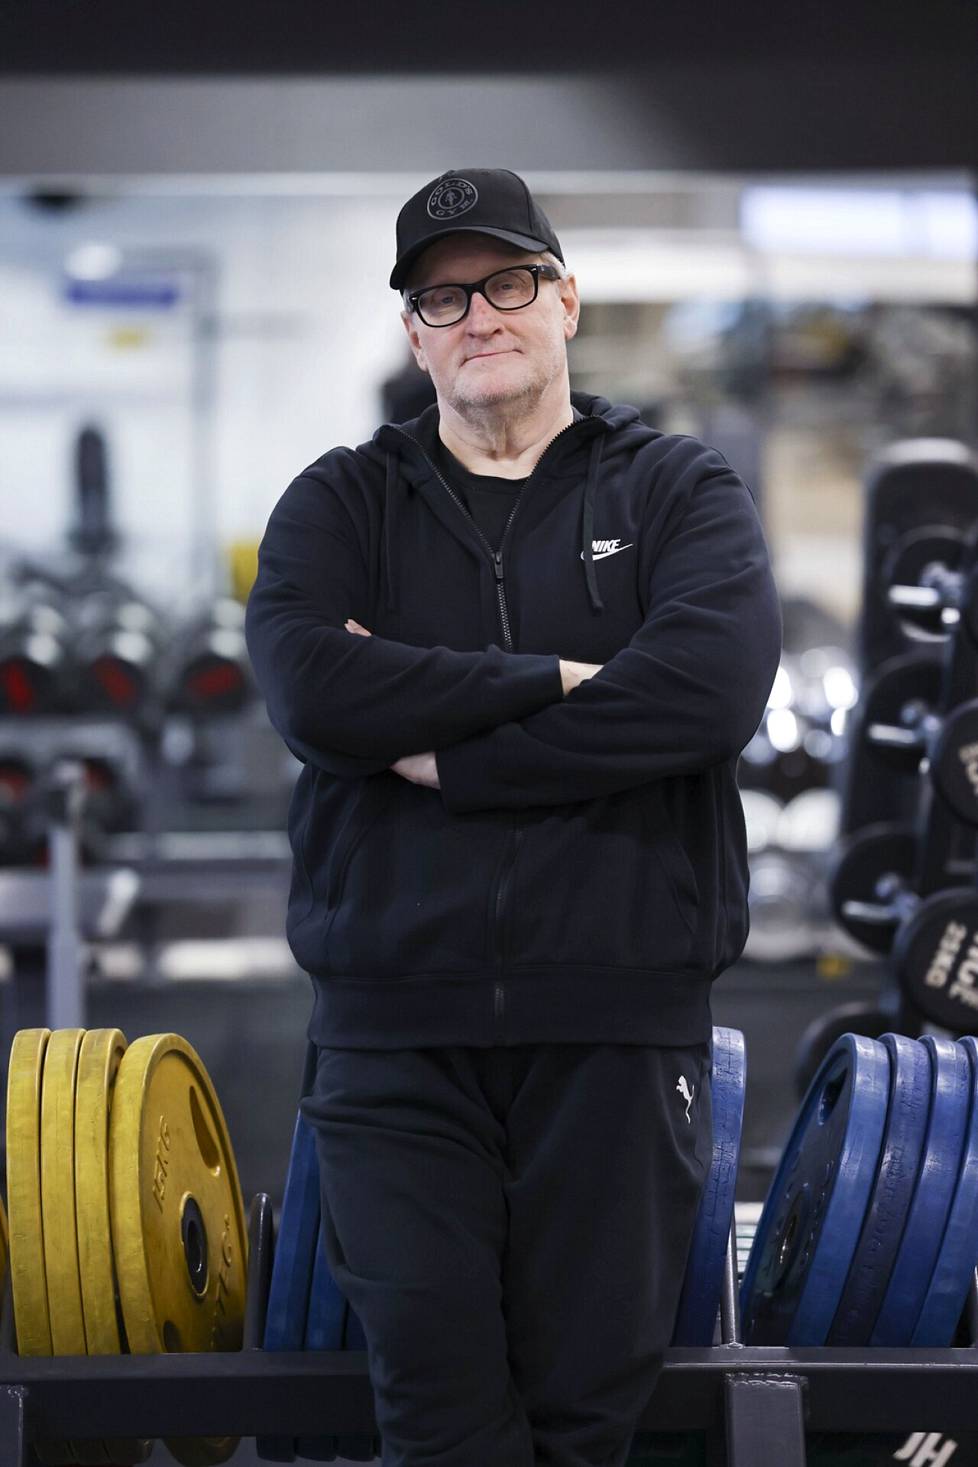 Kari-Pekka “KP” Ourama brought fitness sports to Finland.